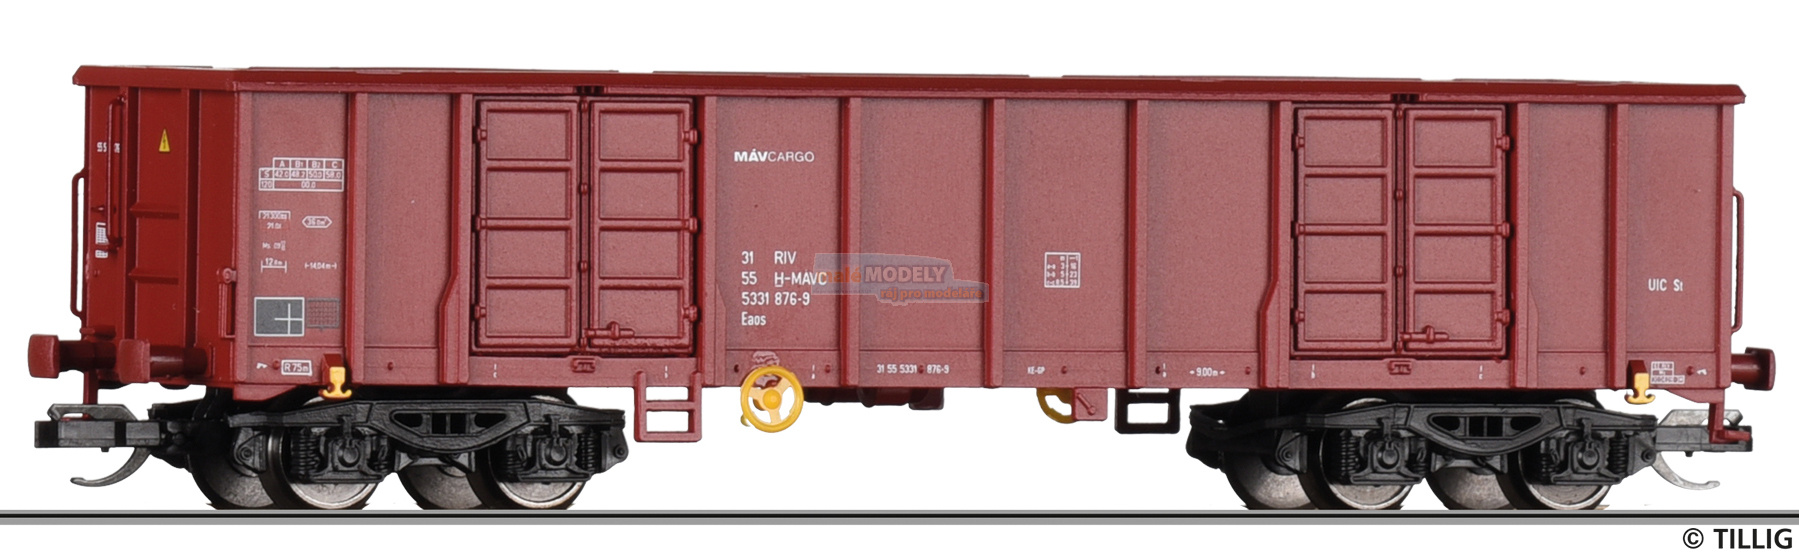 Offener Güterwagen Eaos der MAV Cargo, Ep. VI -FORMVARIANTE-